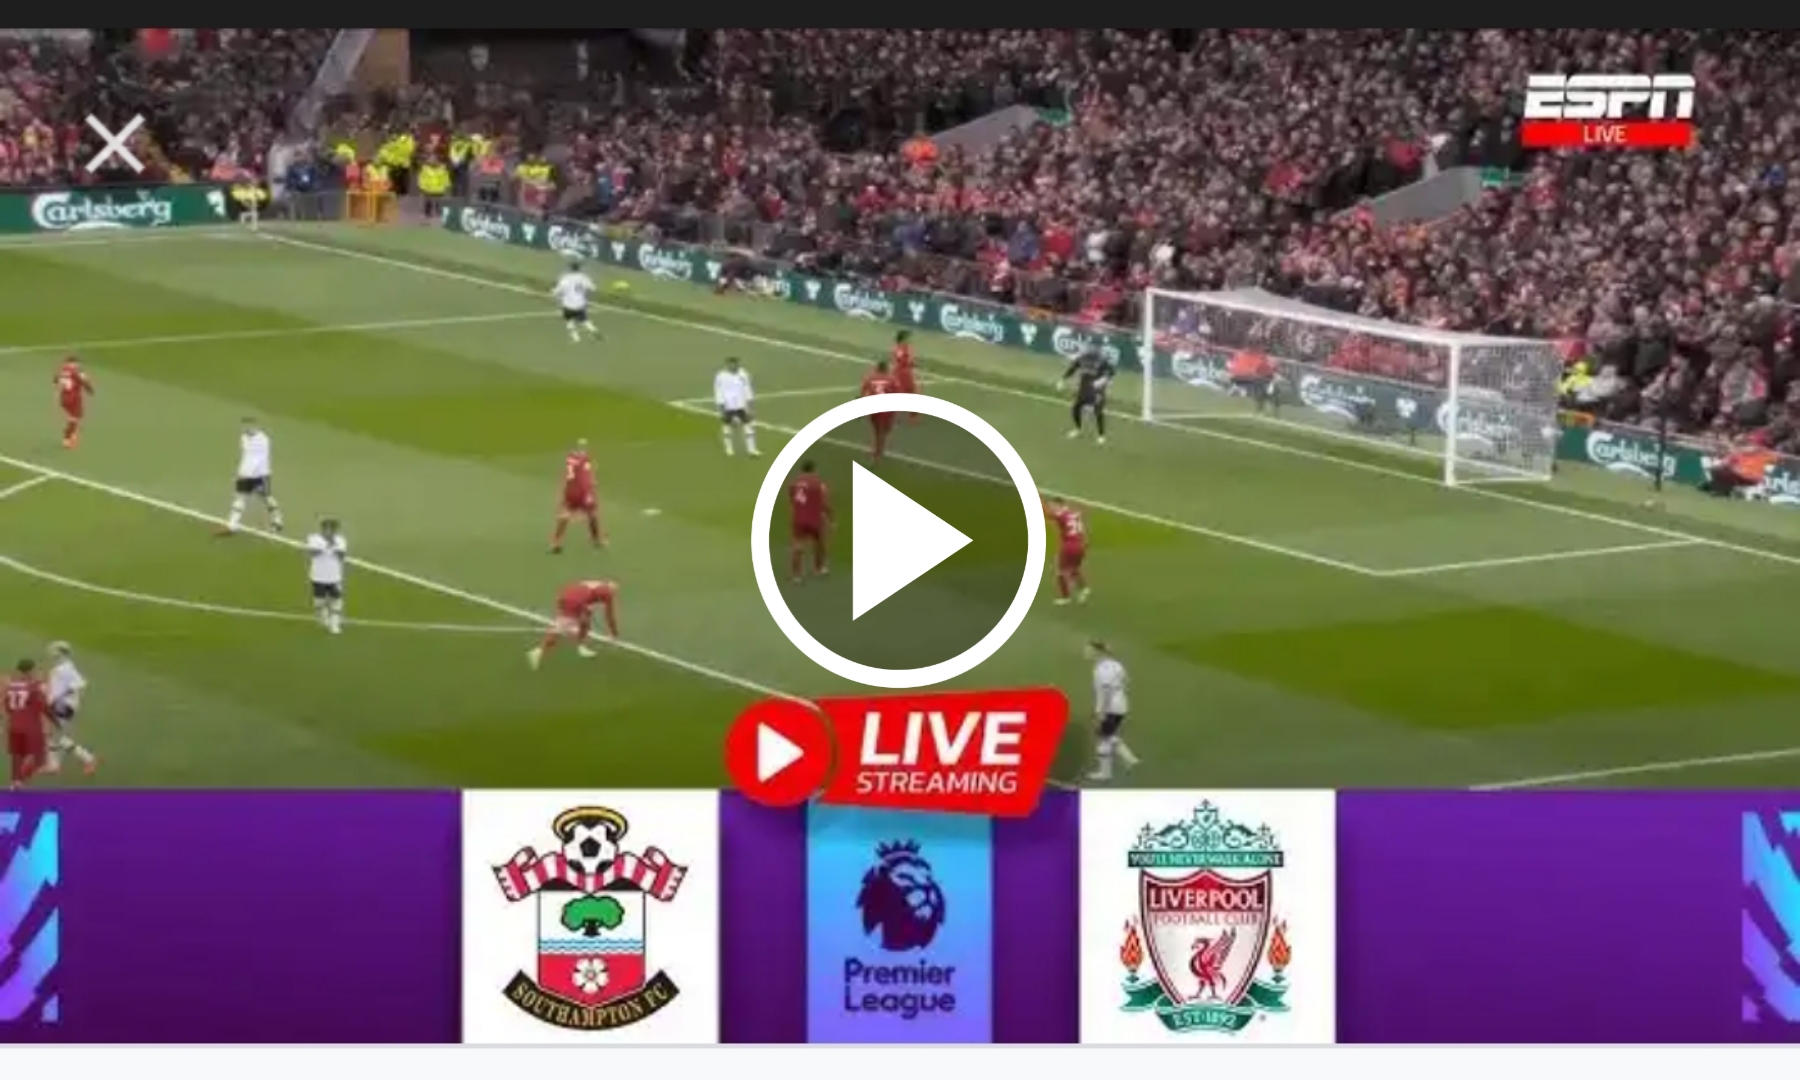 Live stream: Watch Liverpool vs Southampton Live | Premier league